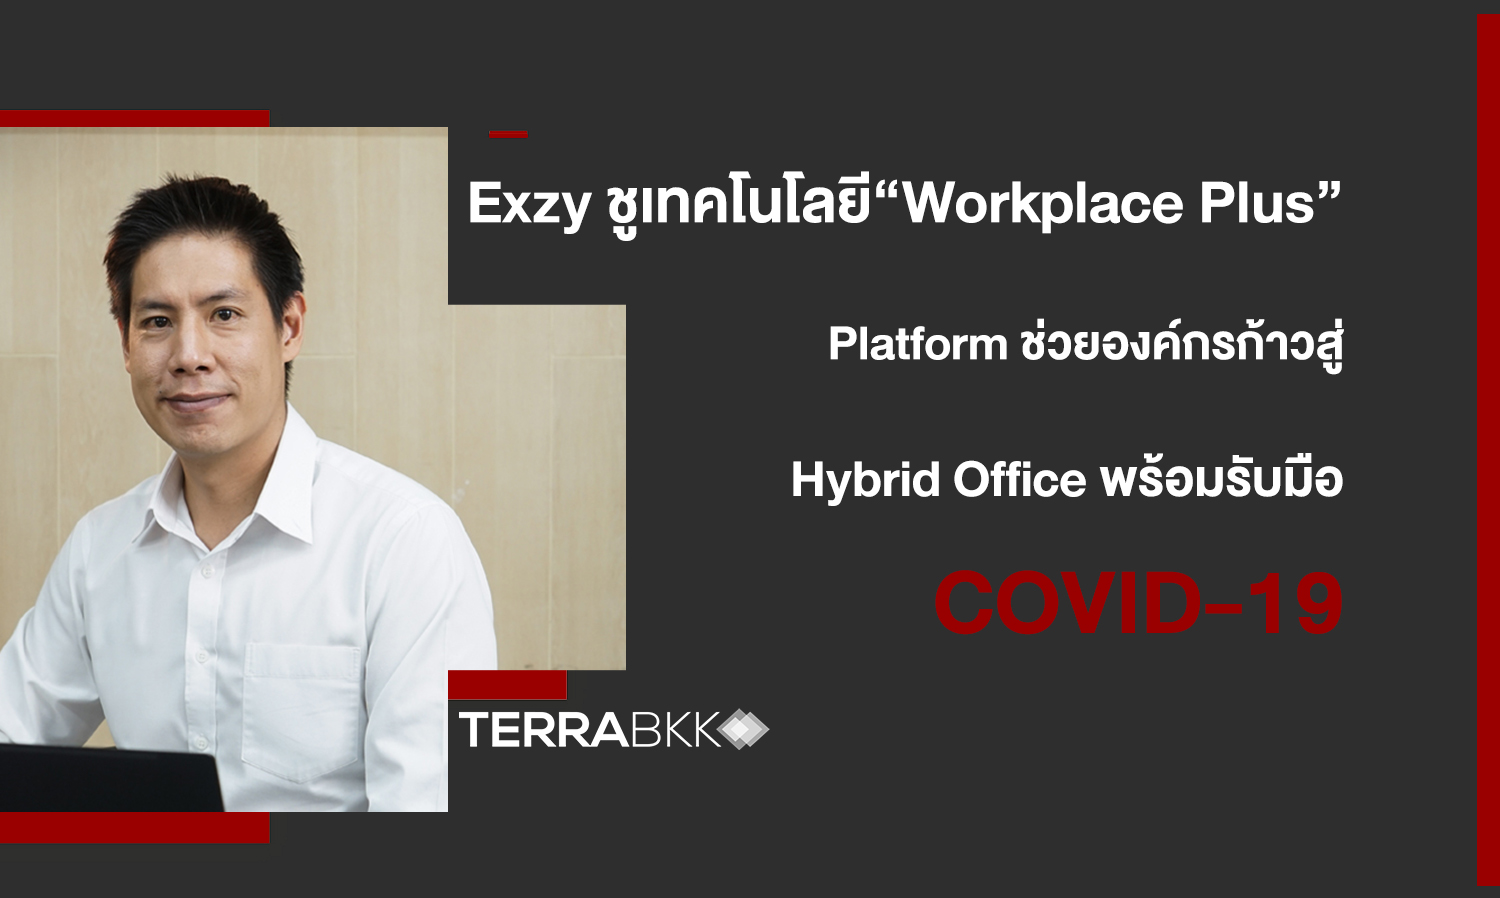 Exzy ชูเทคโนโลยี “Workplace Plus” Platform ช่วยองค์กรก้าวสู่ Hybrid Office พร้อมรับมือ COVID-19